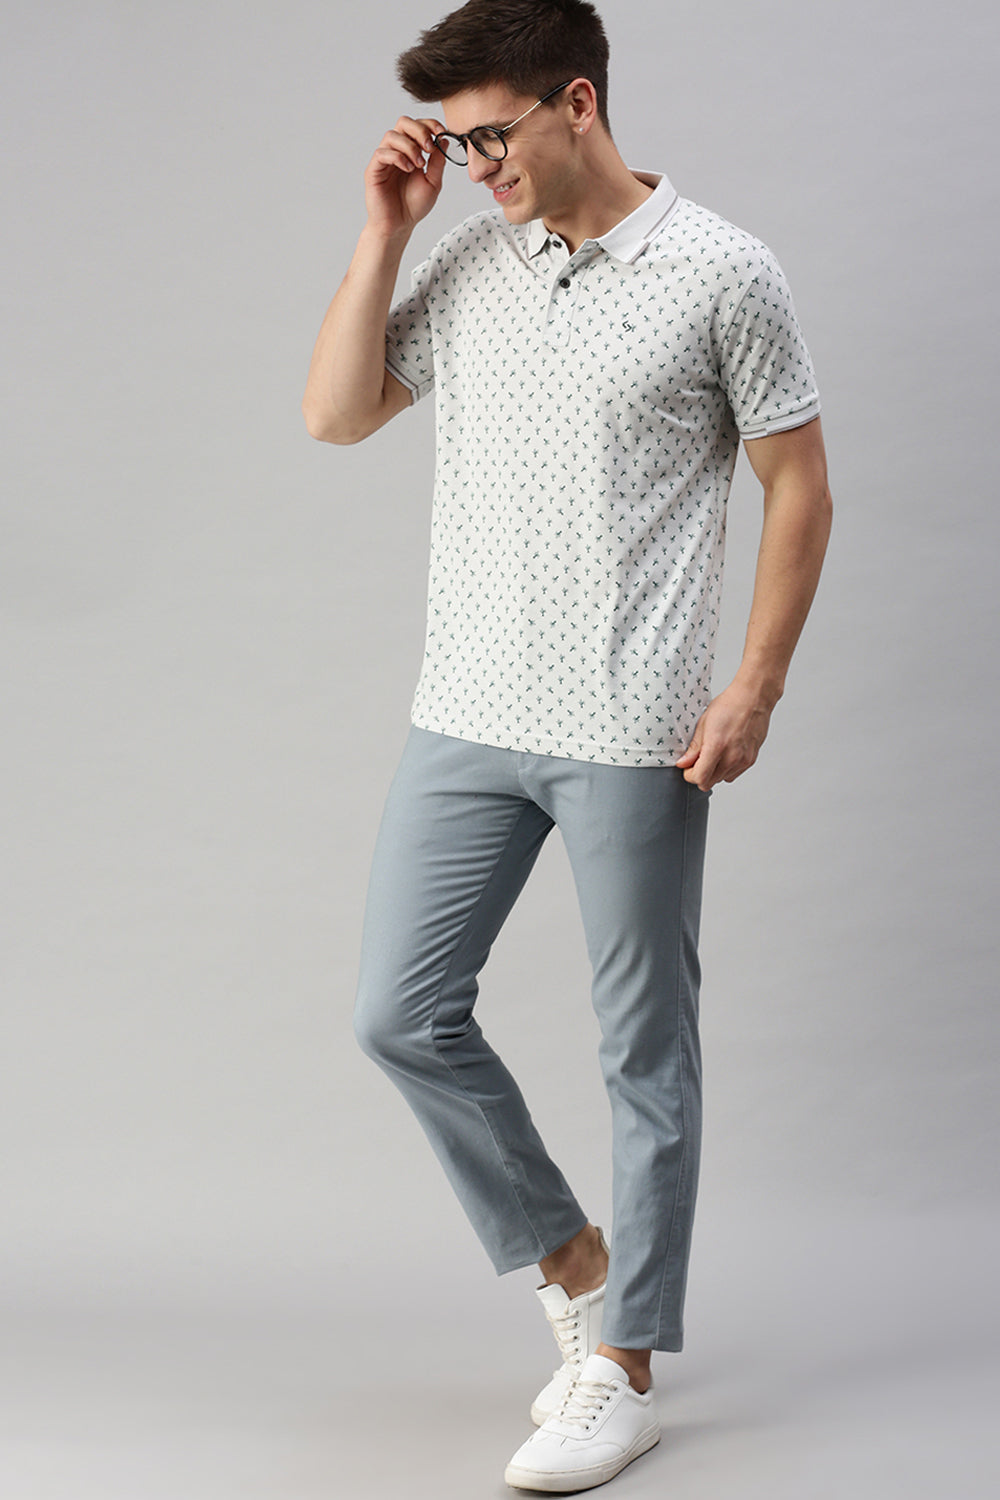 Classic Polo Men's Cotton Half Sleeve Printed Slim Fit Polo Neck White Color T-Shirt | Prm - 760 A